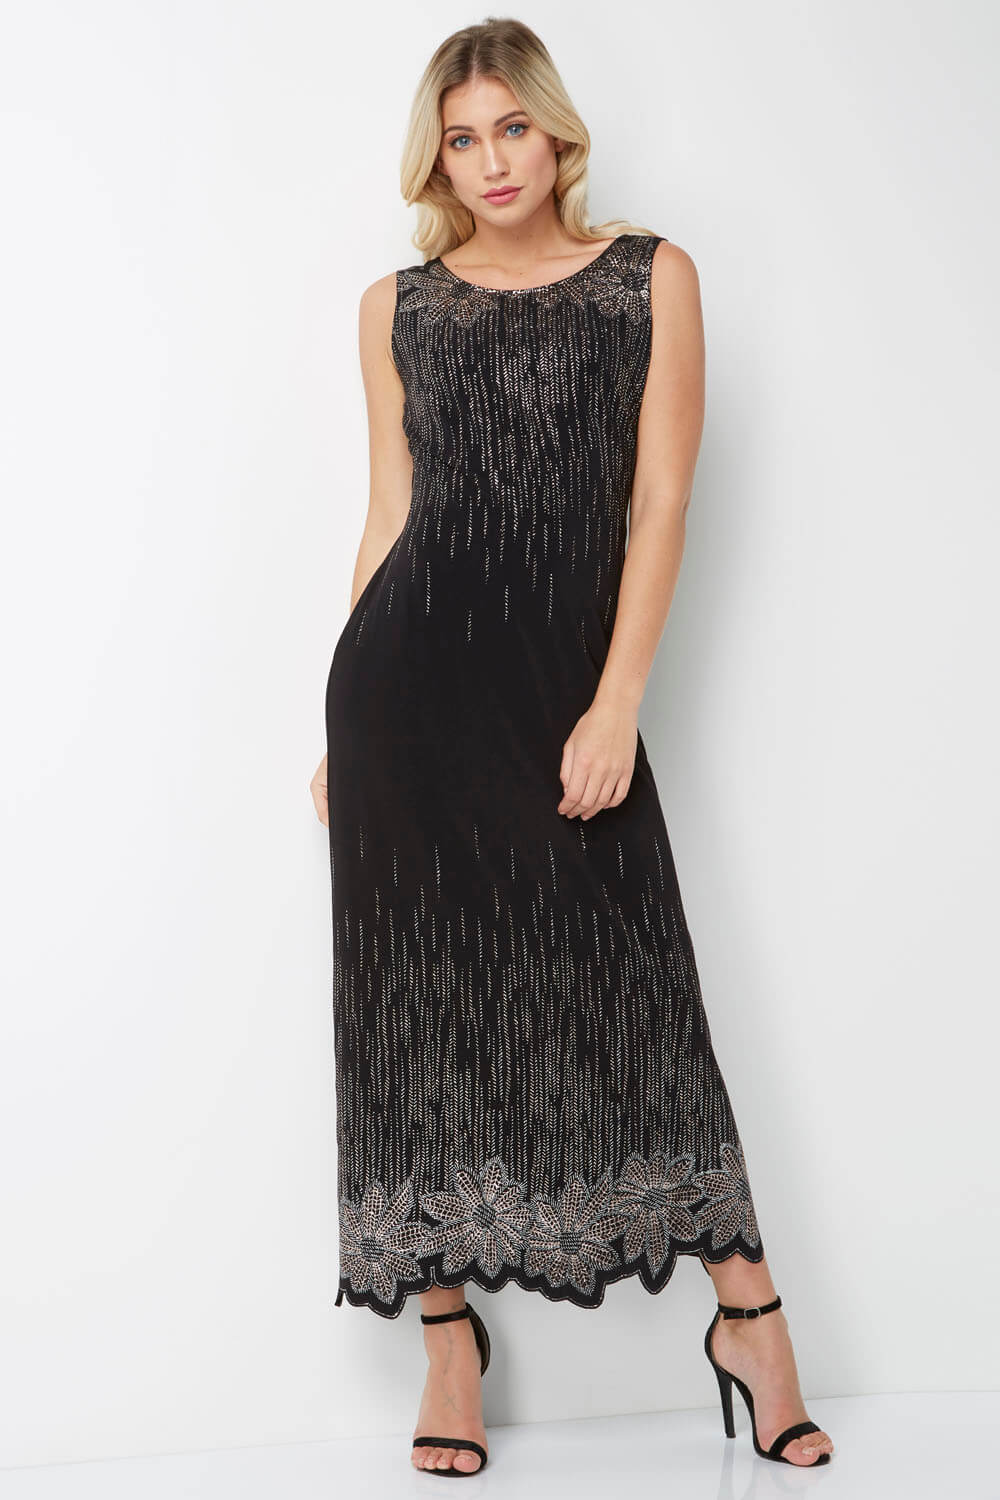 Glitter Detail Floral Maxi Dress in Black - Roman Originals UK